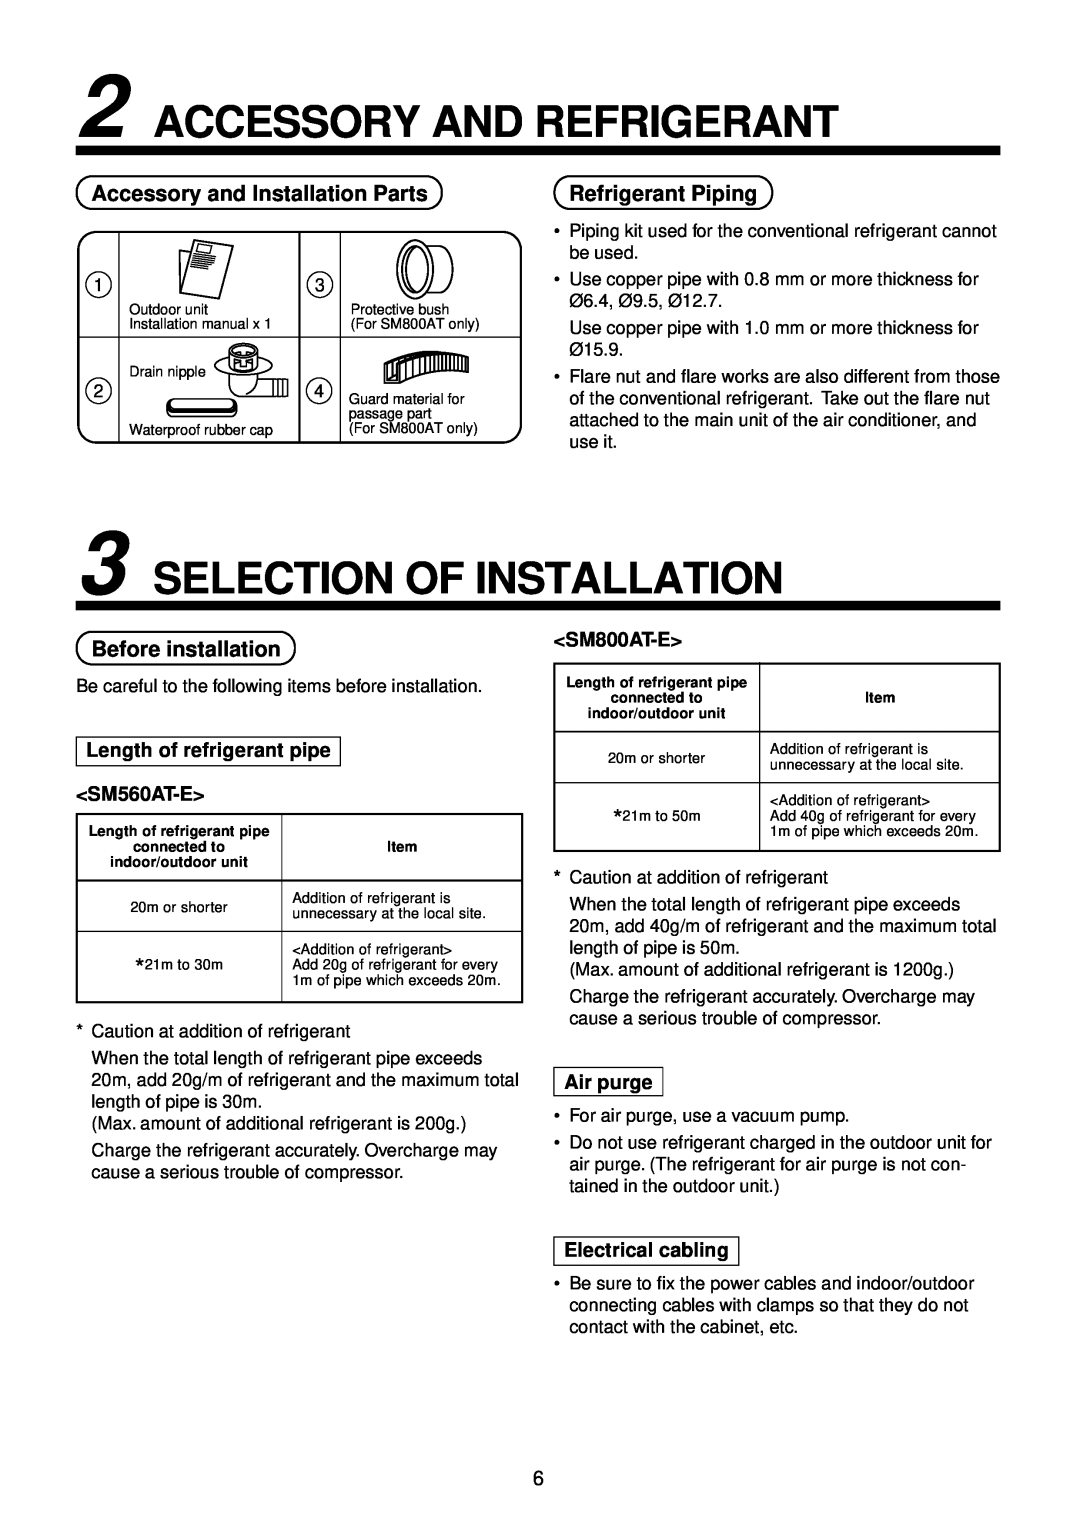 Toshiba R410A Accessory And Refrigerant, Selection Of Installation, Accessory and Installation Parts, Refrigerant Piping 